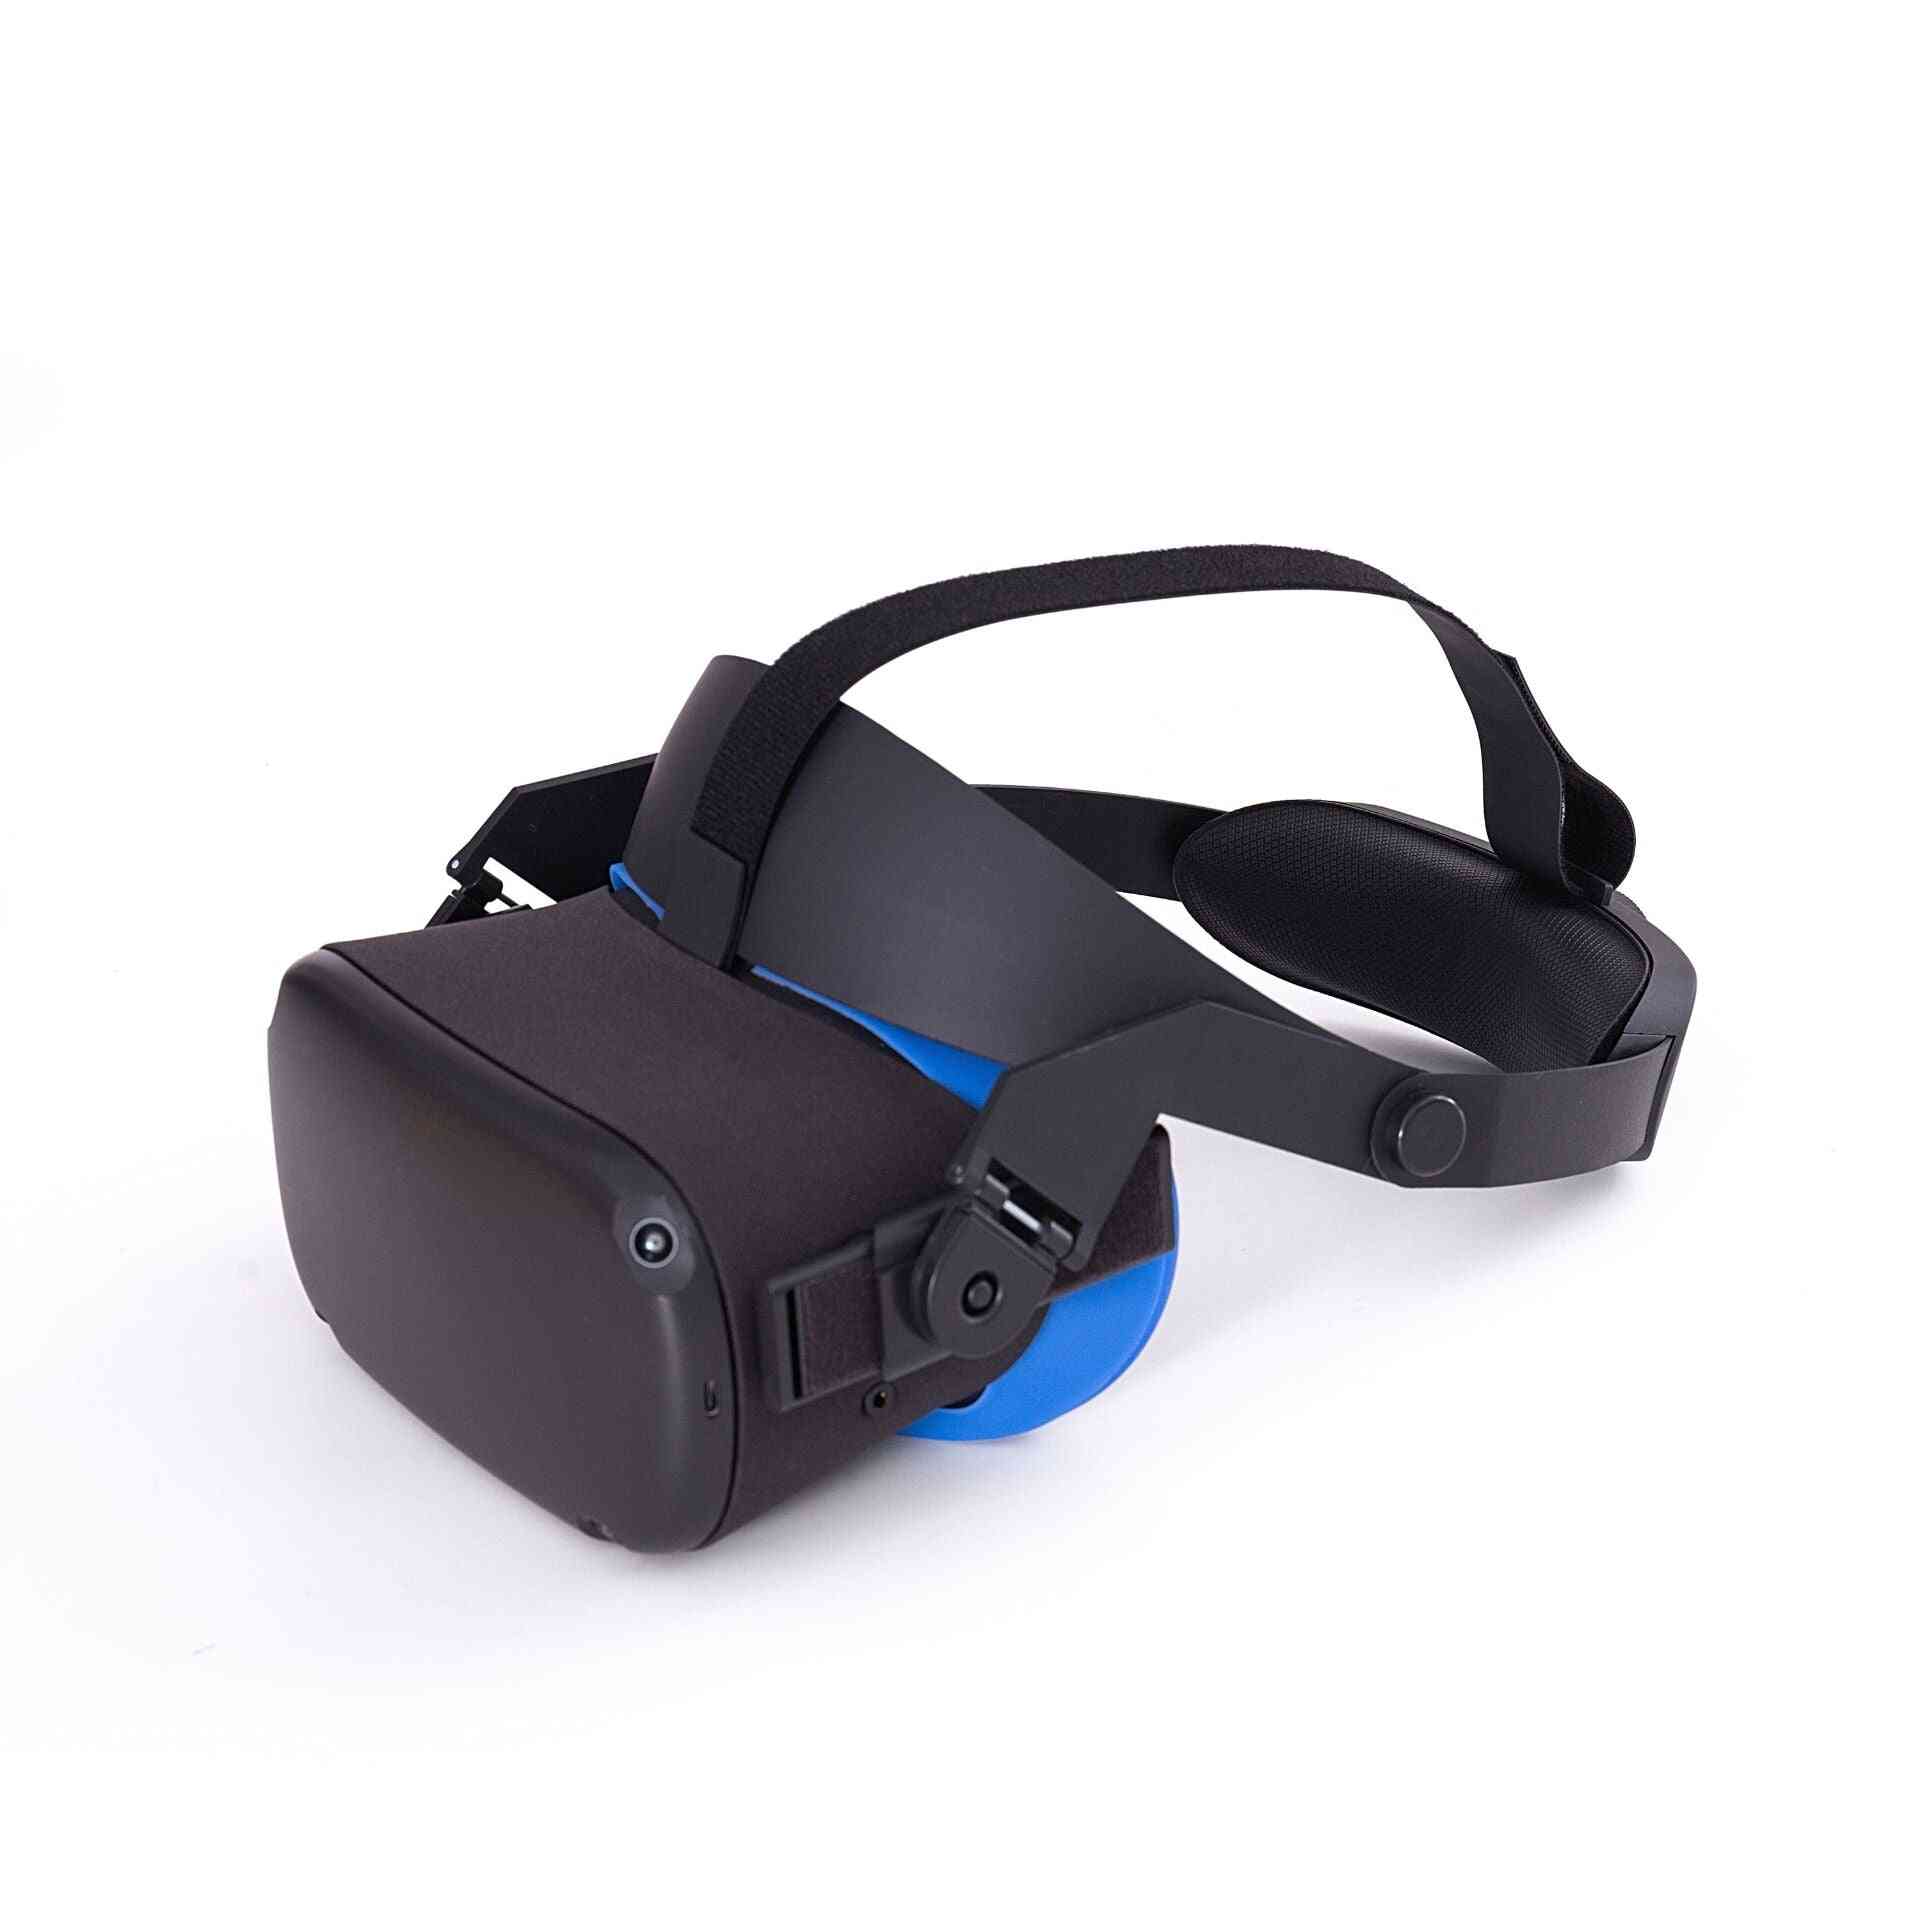 Halo remen ugodan i prilagodljiv, pokrivala za virtualnu stvarnost